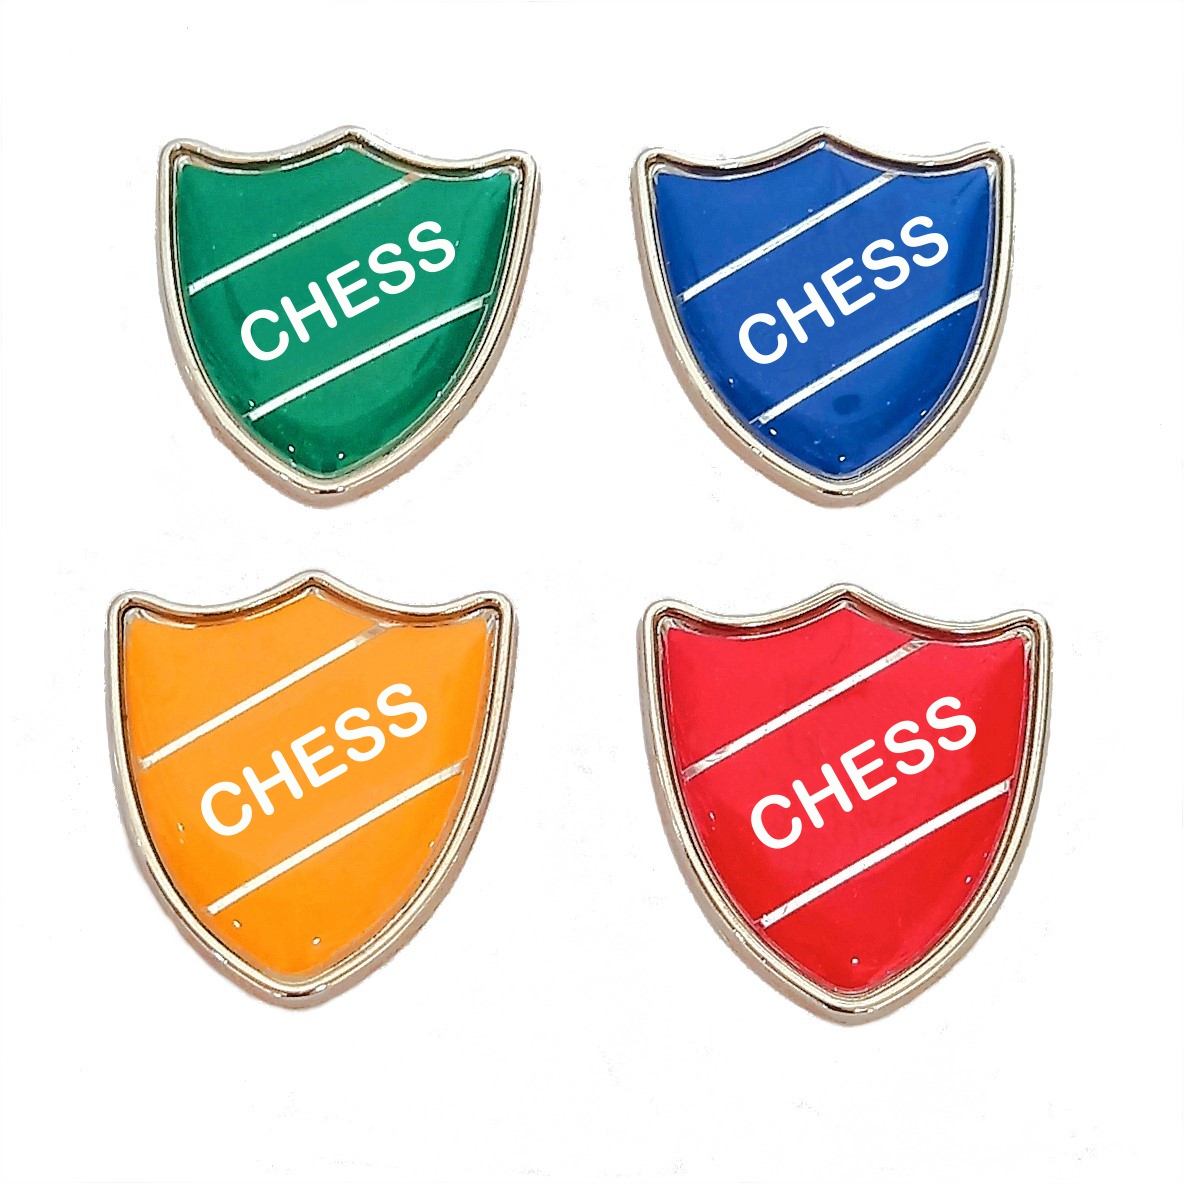 CHESS shield badge